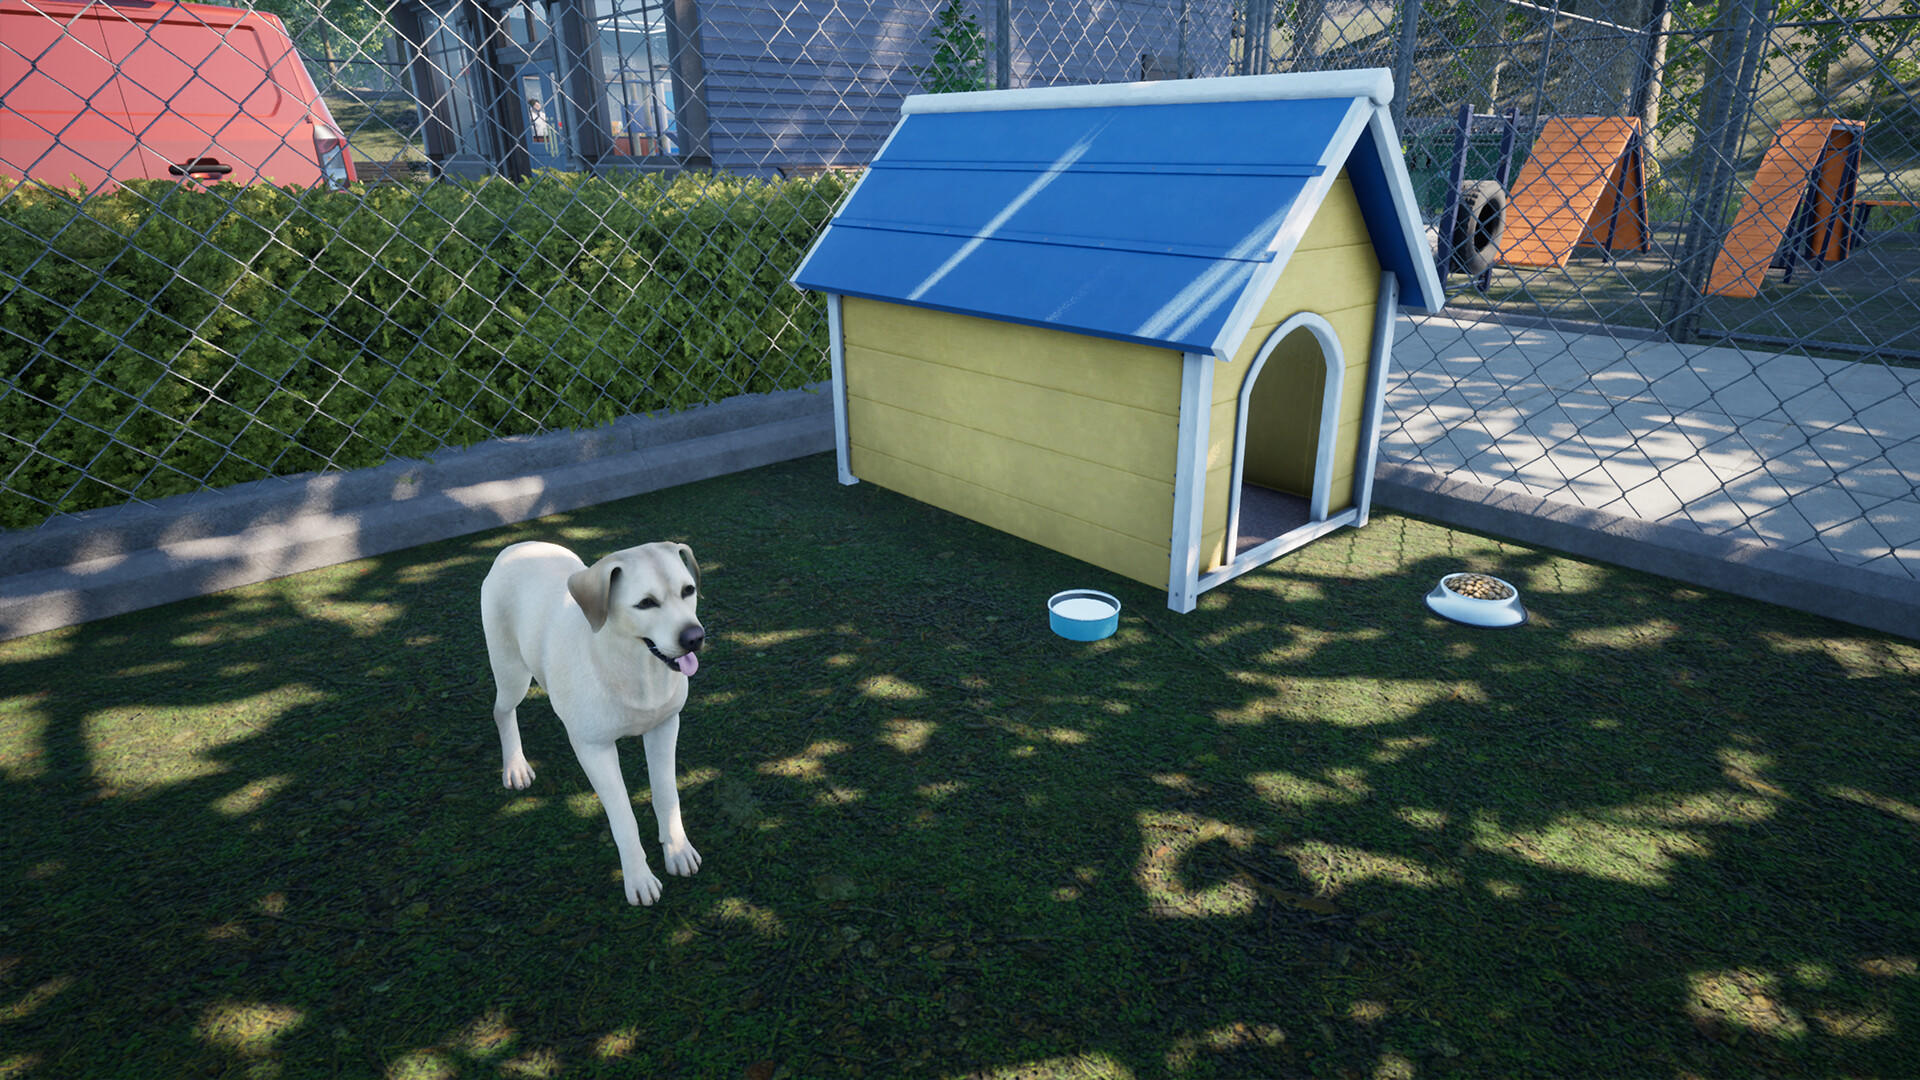 Pet Shop Simulator 2 게임 스크린 샷